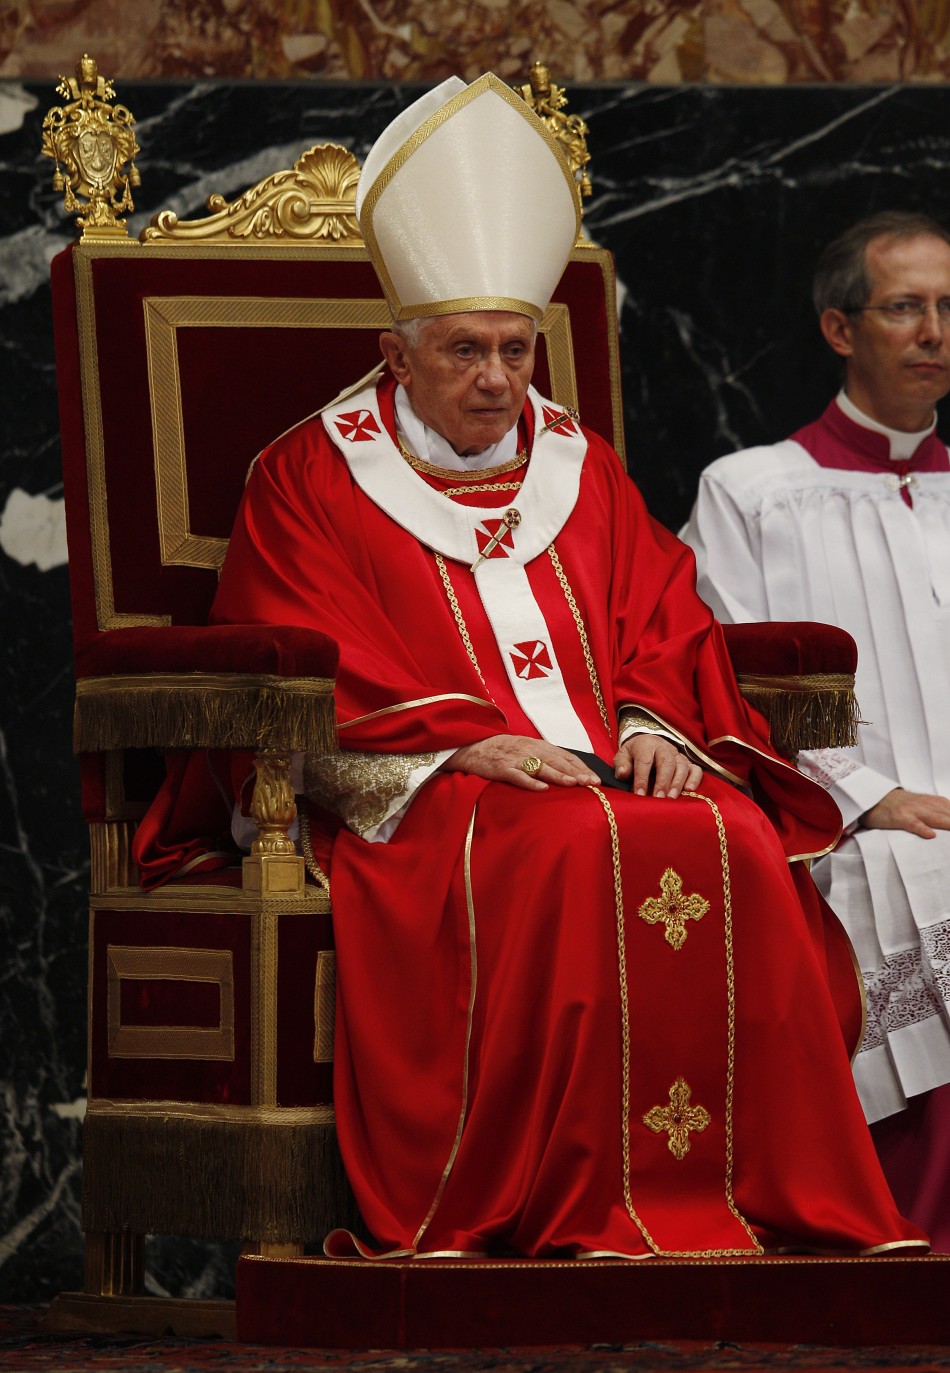 Pope Benedict XVI Suffering from Arthritis